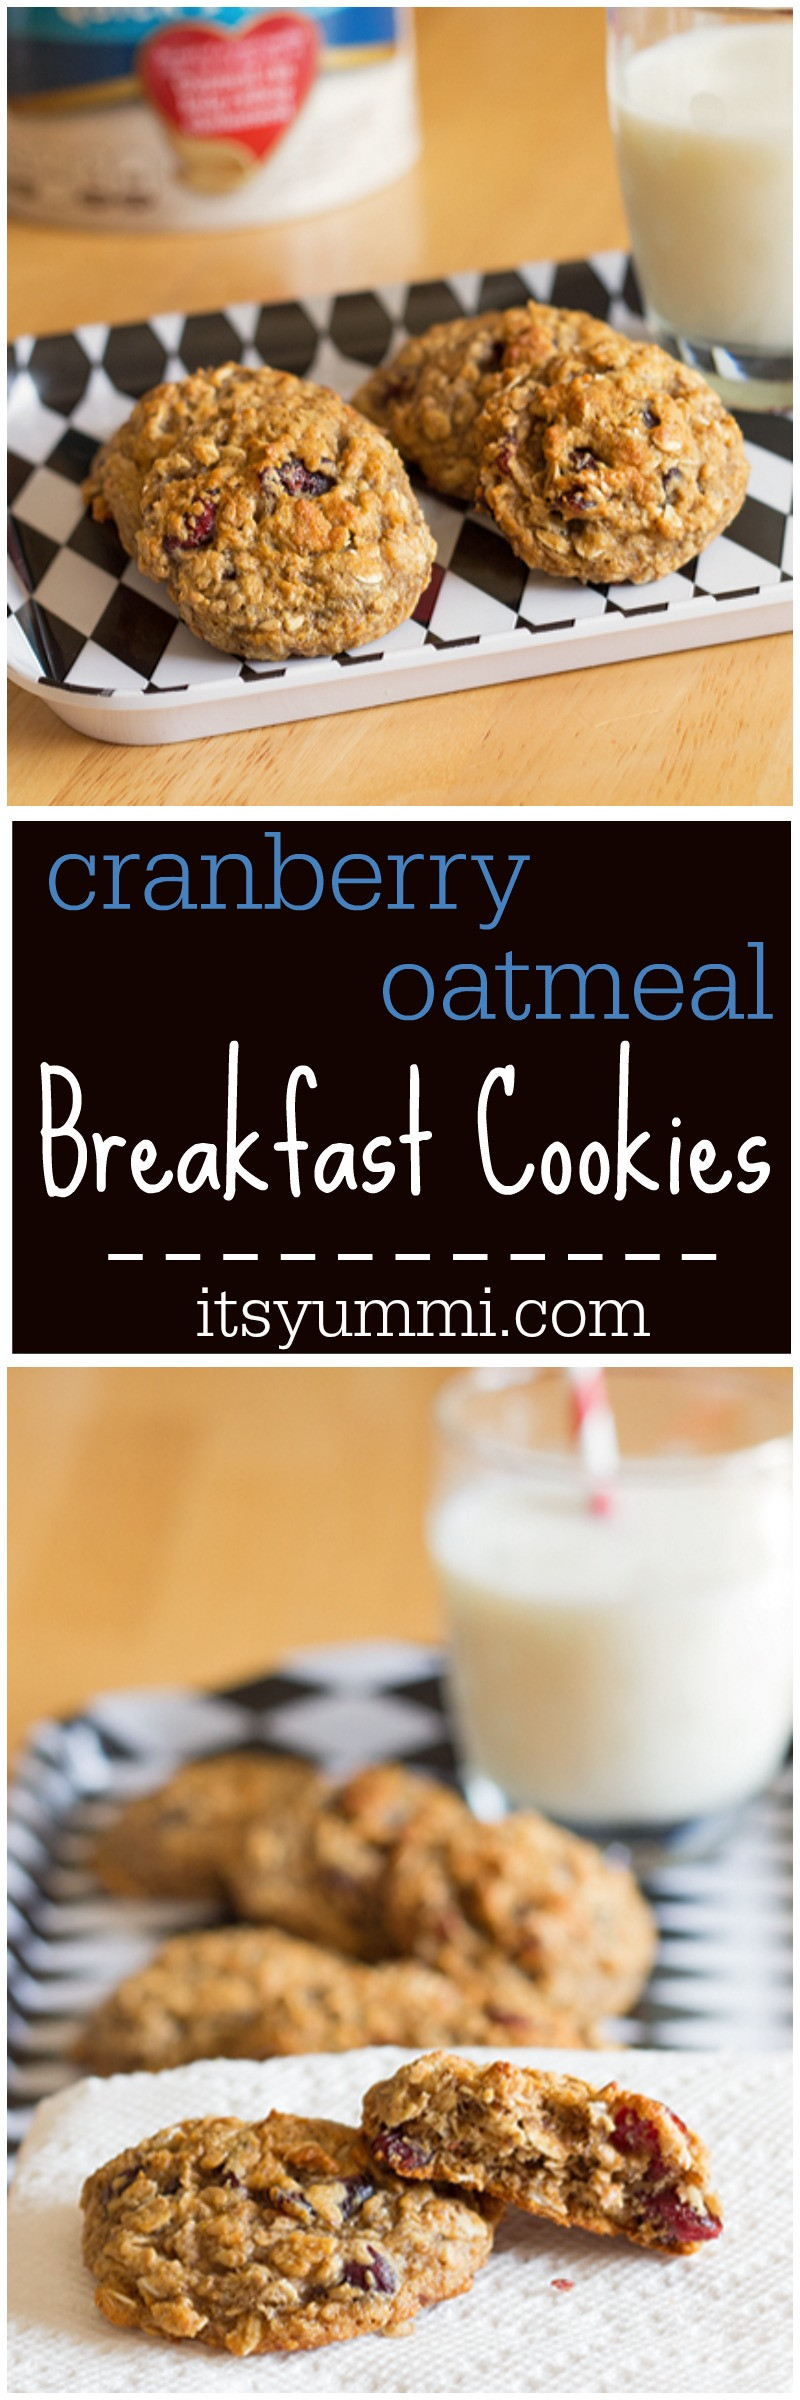 Oatmeal Breakfast Cookies
 Cranberry Oatmeal Breakfast Cookies ⋆ Its Yummi